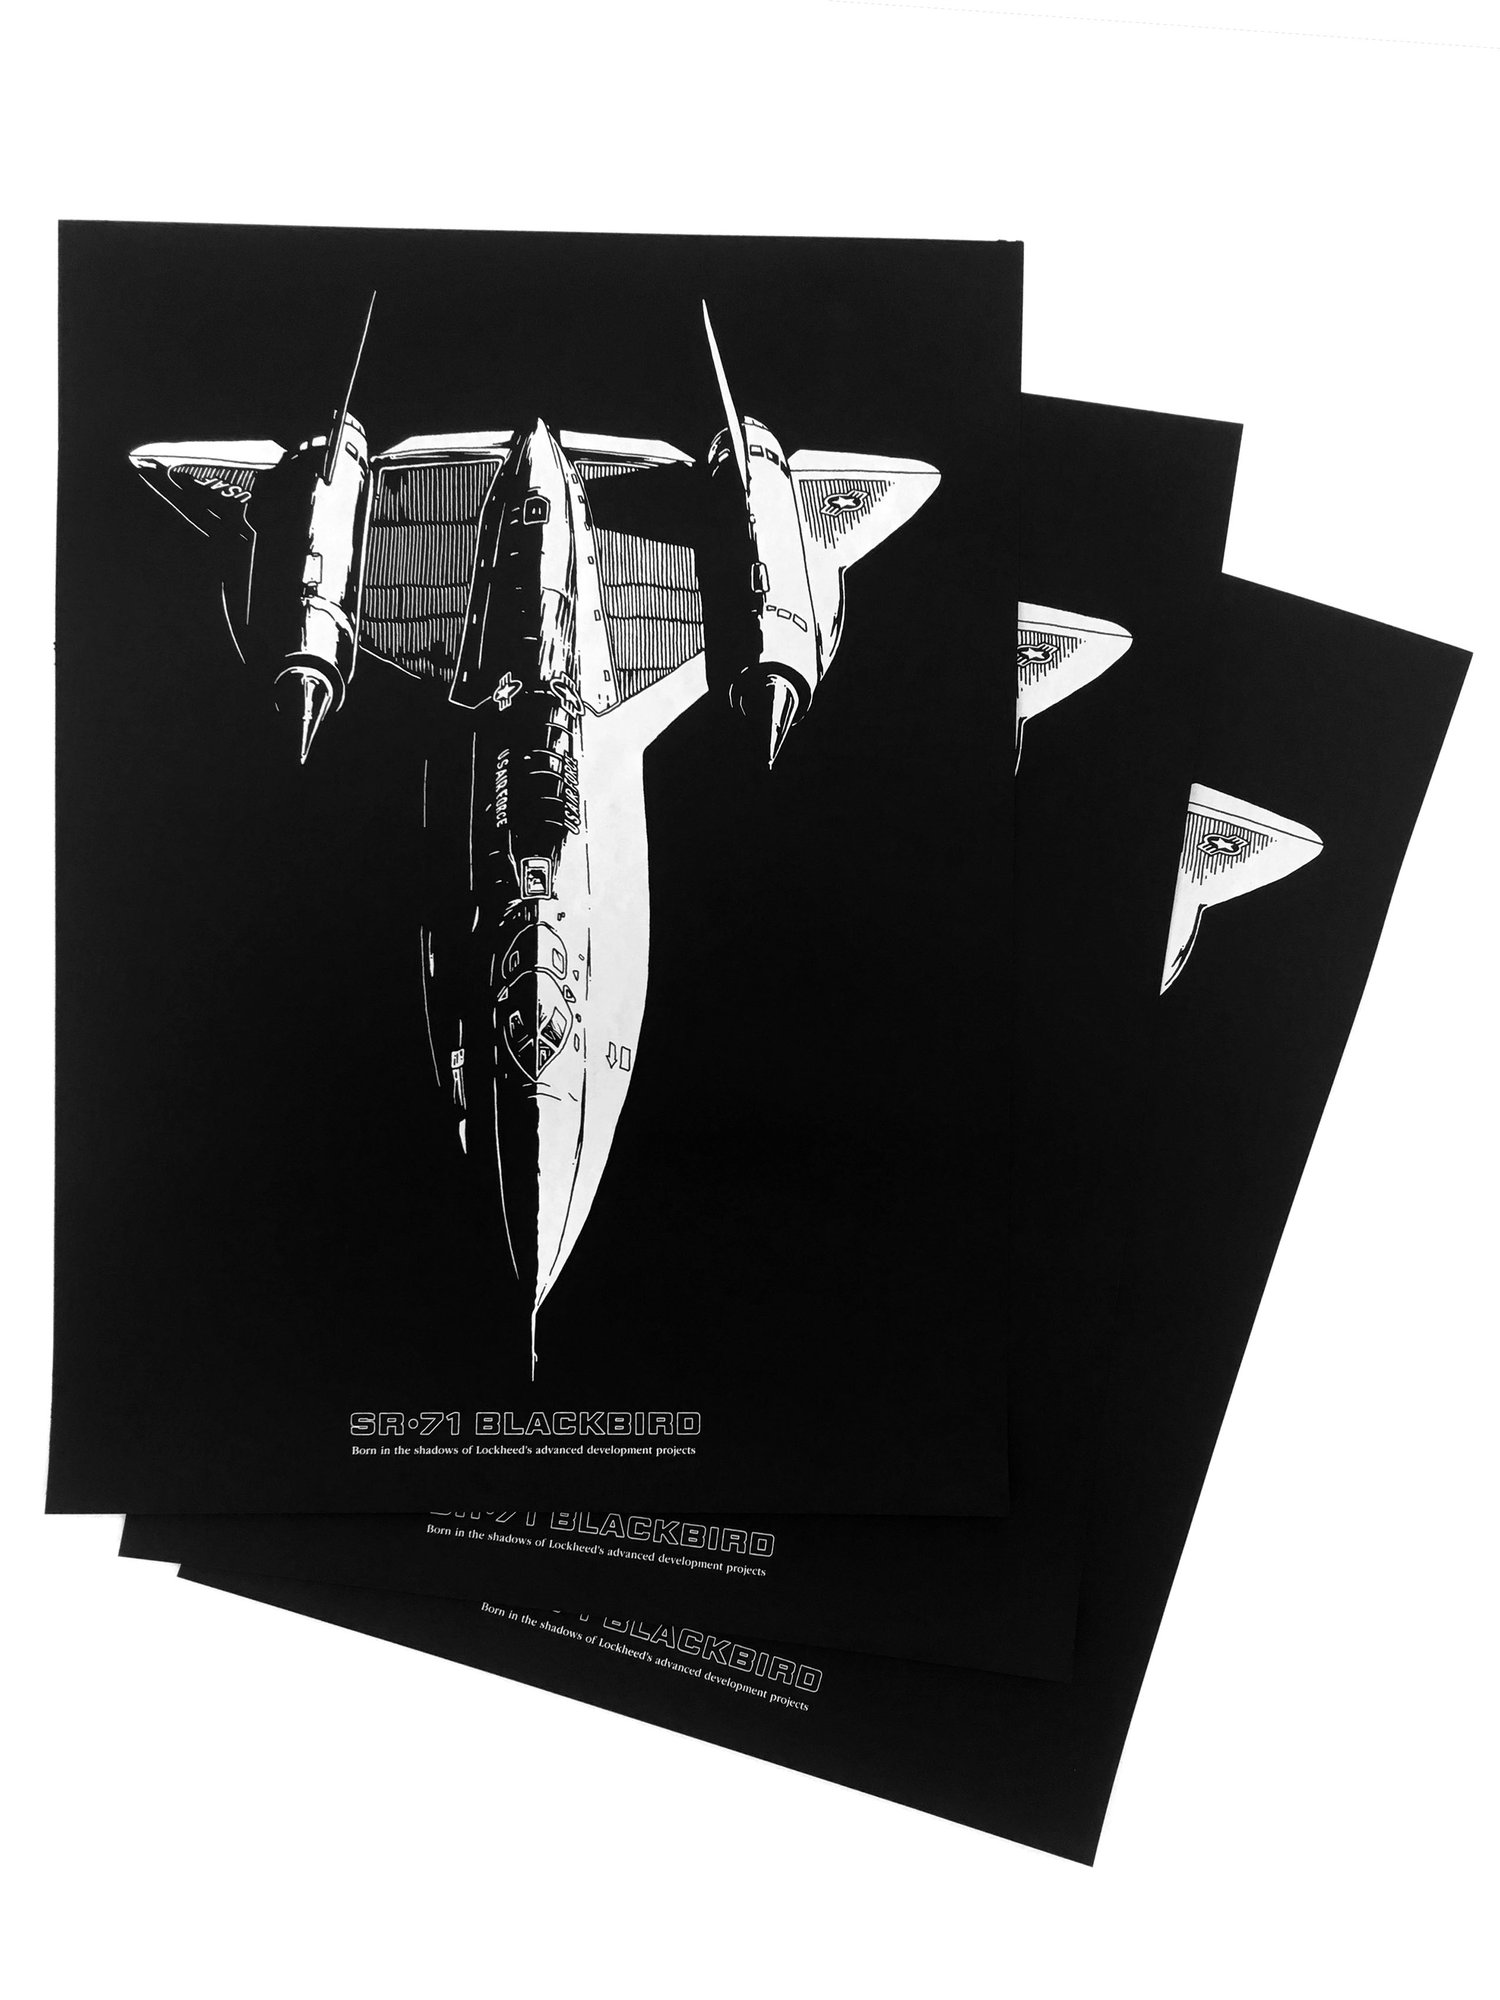 Image of SR-71 poster